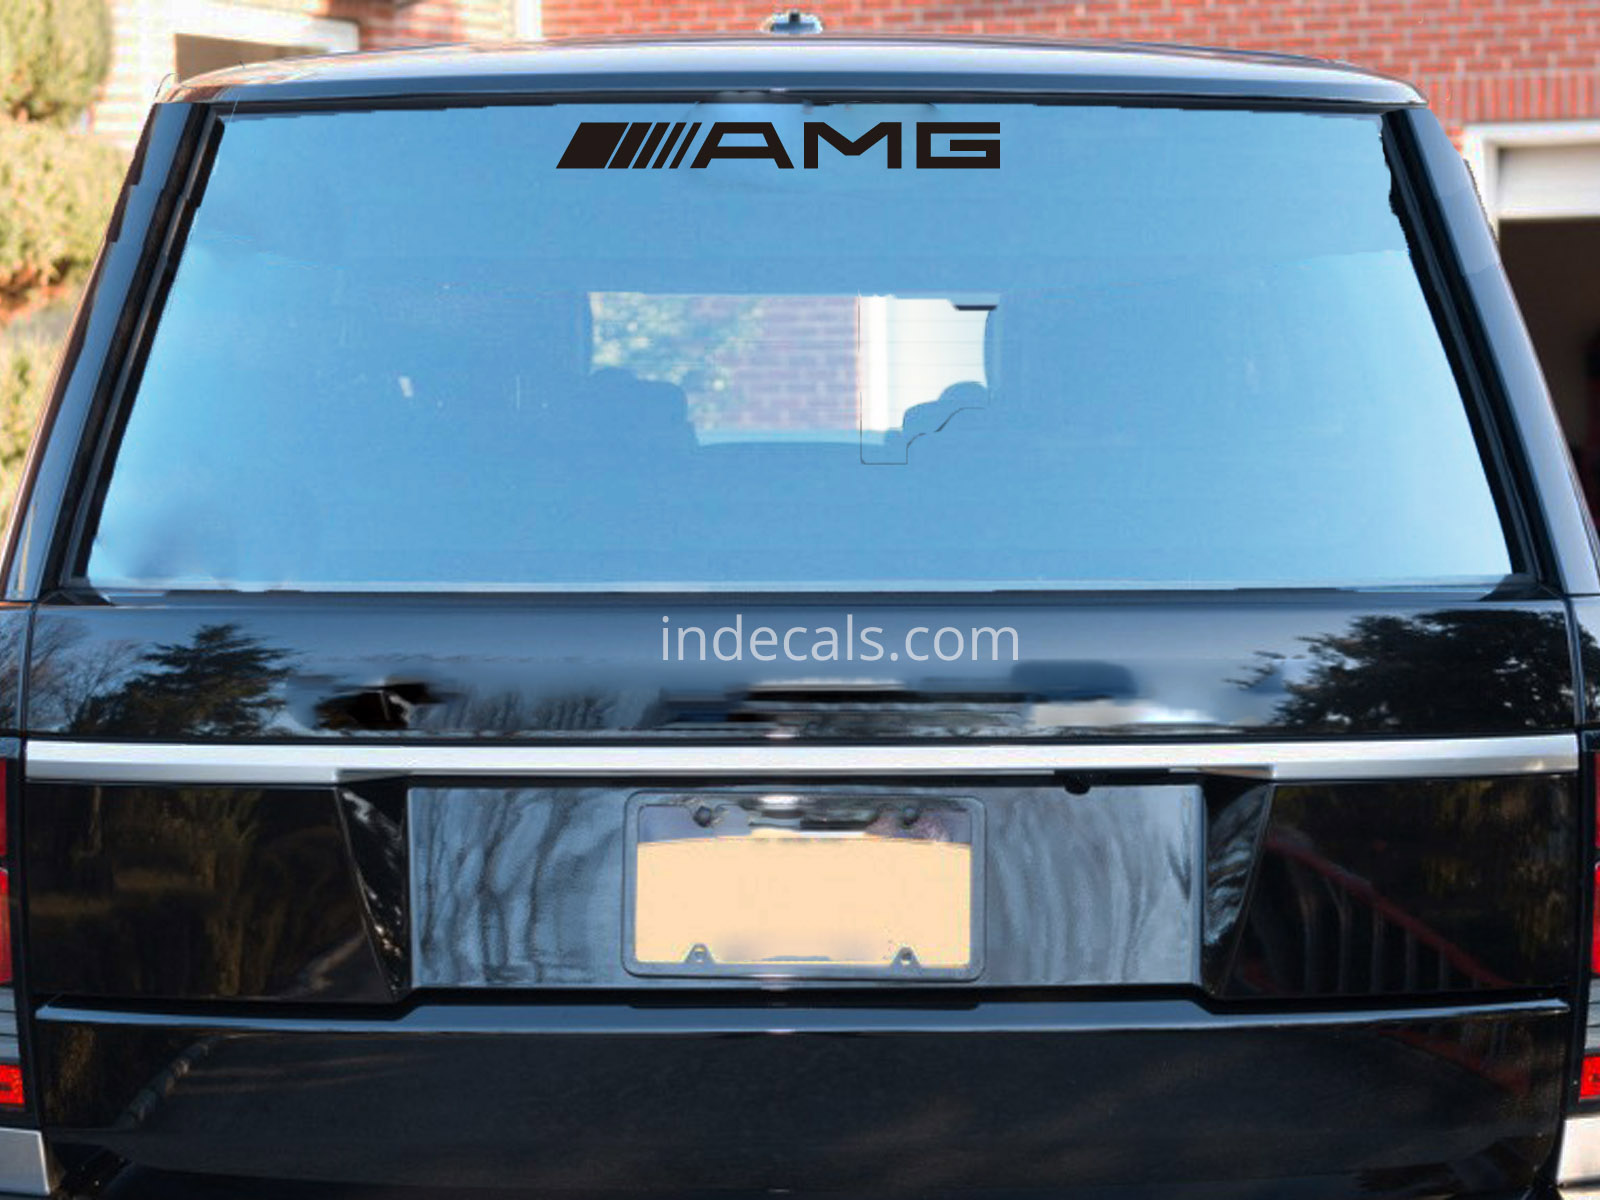 1 x AMG Sticker for Windshield or Back Window - Black